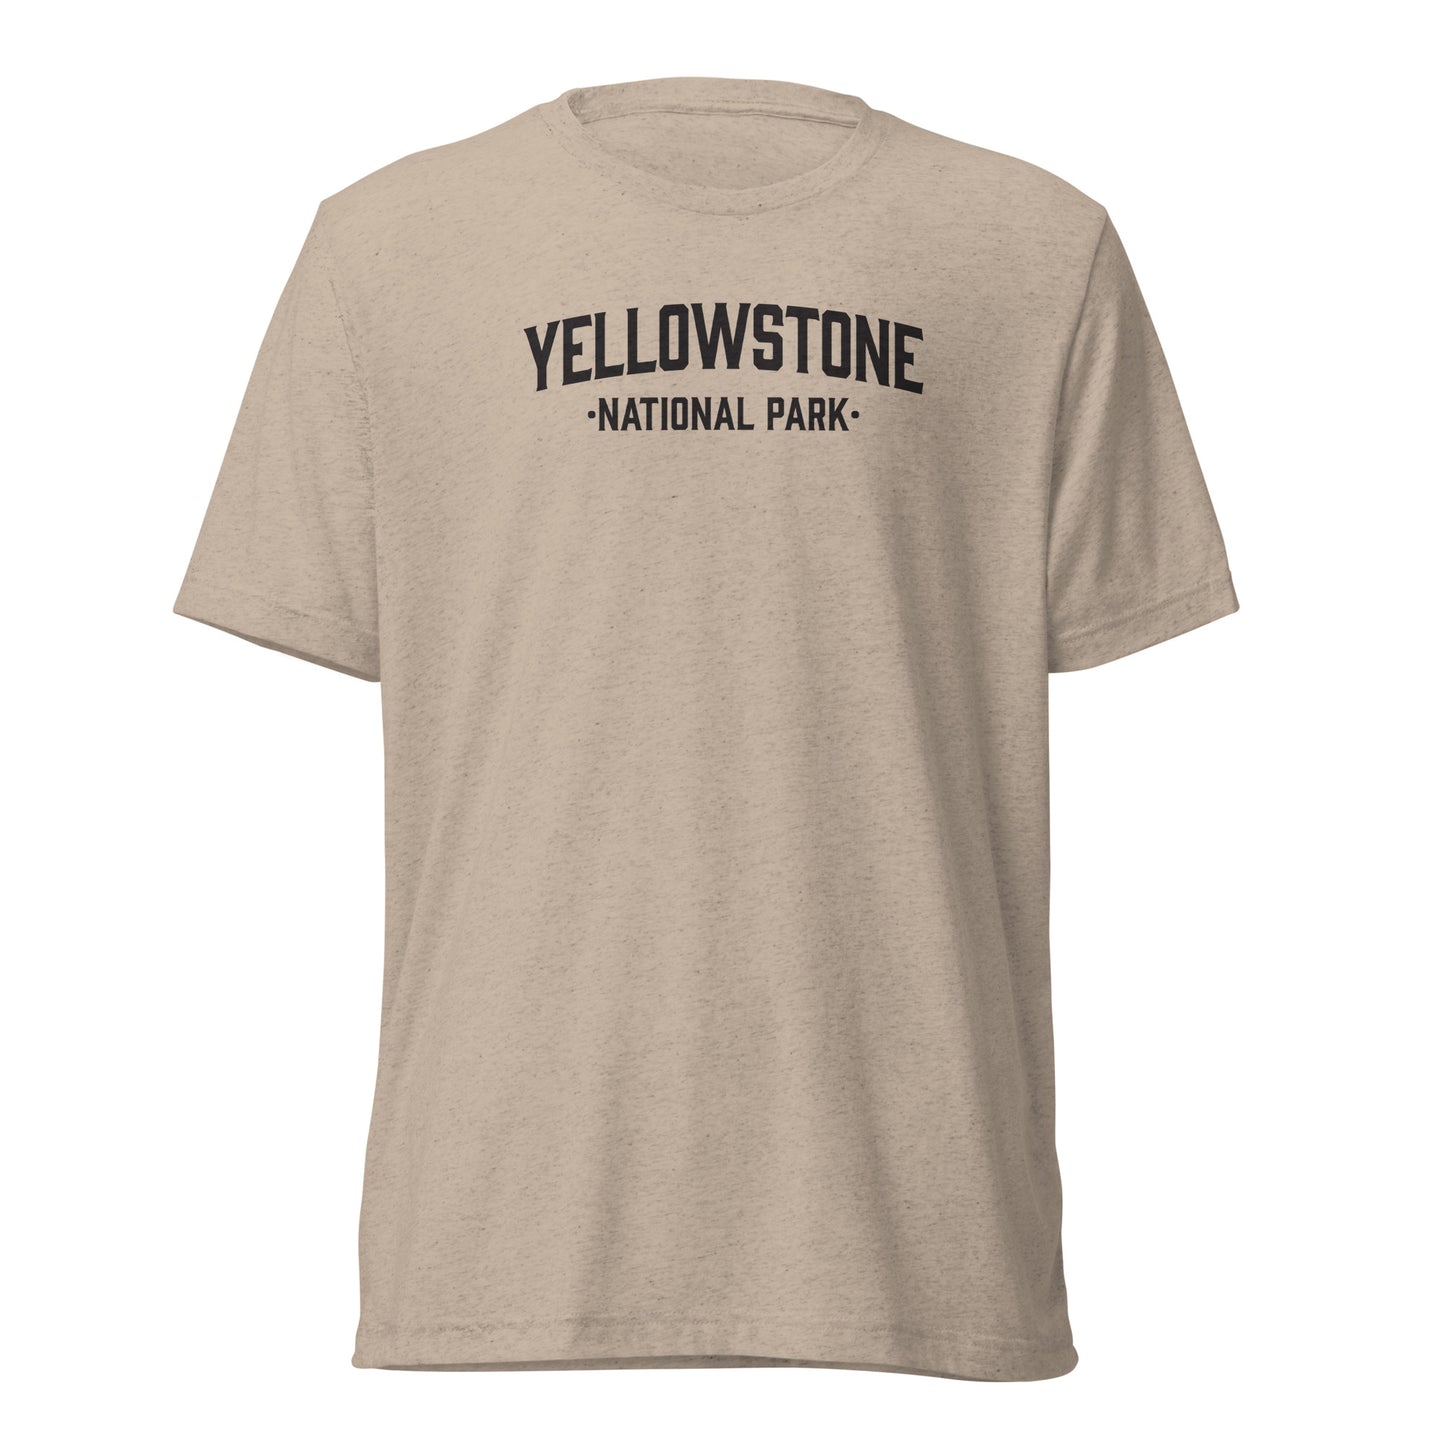 Premium Everyday Yellowstone National Park Tee